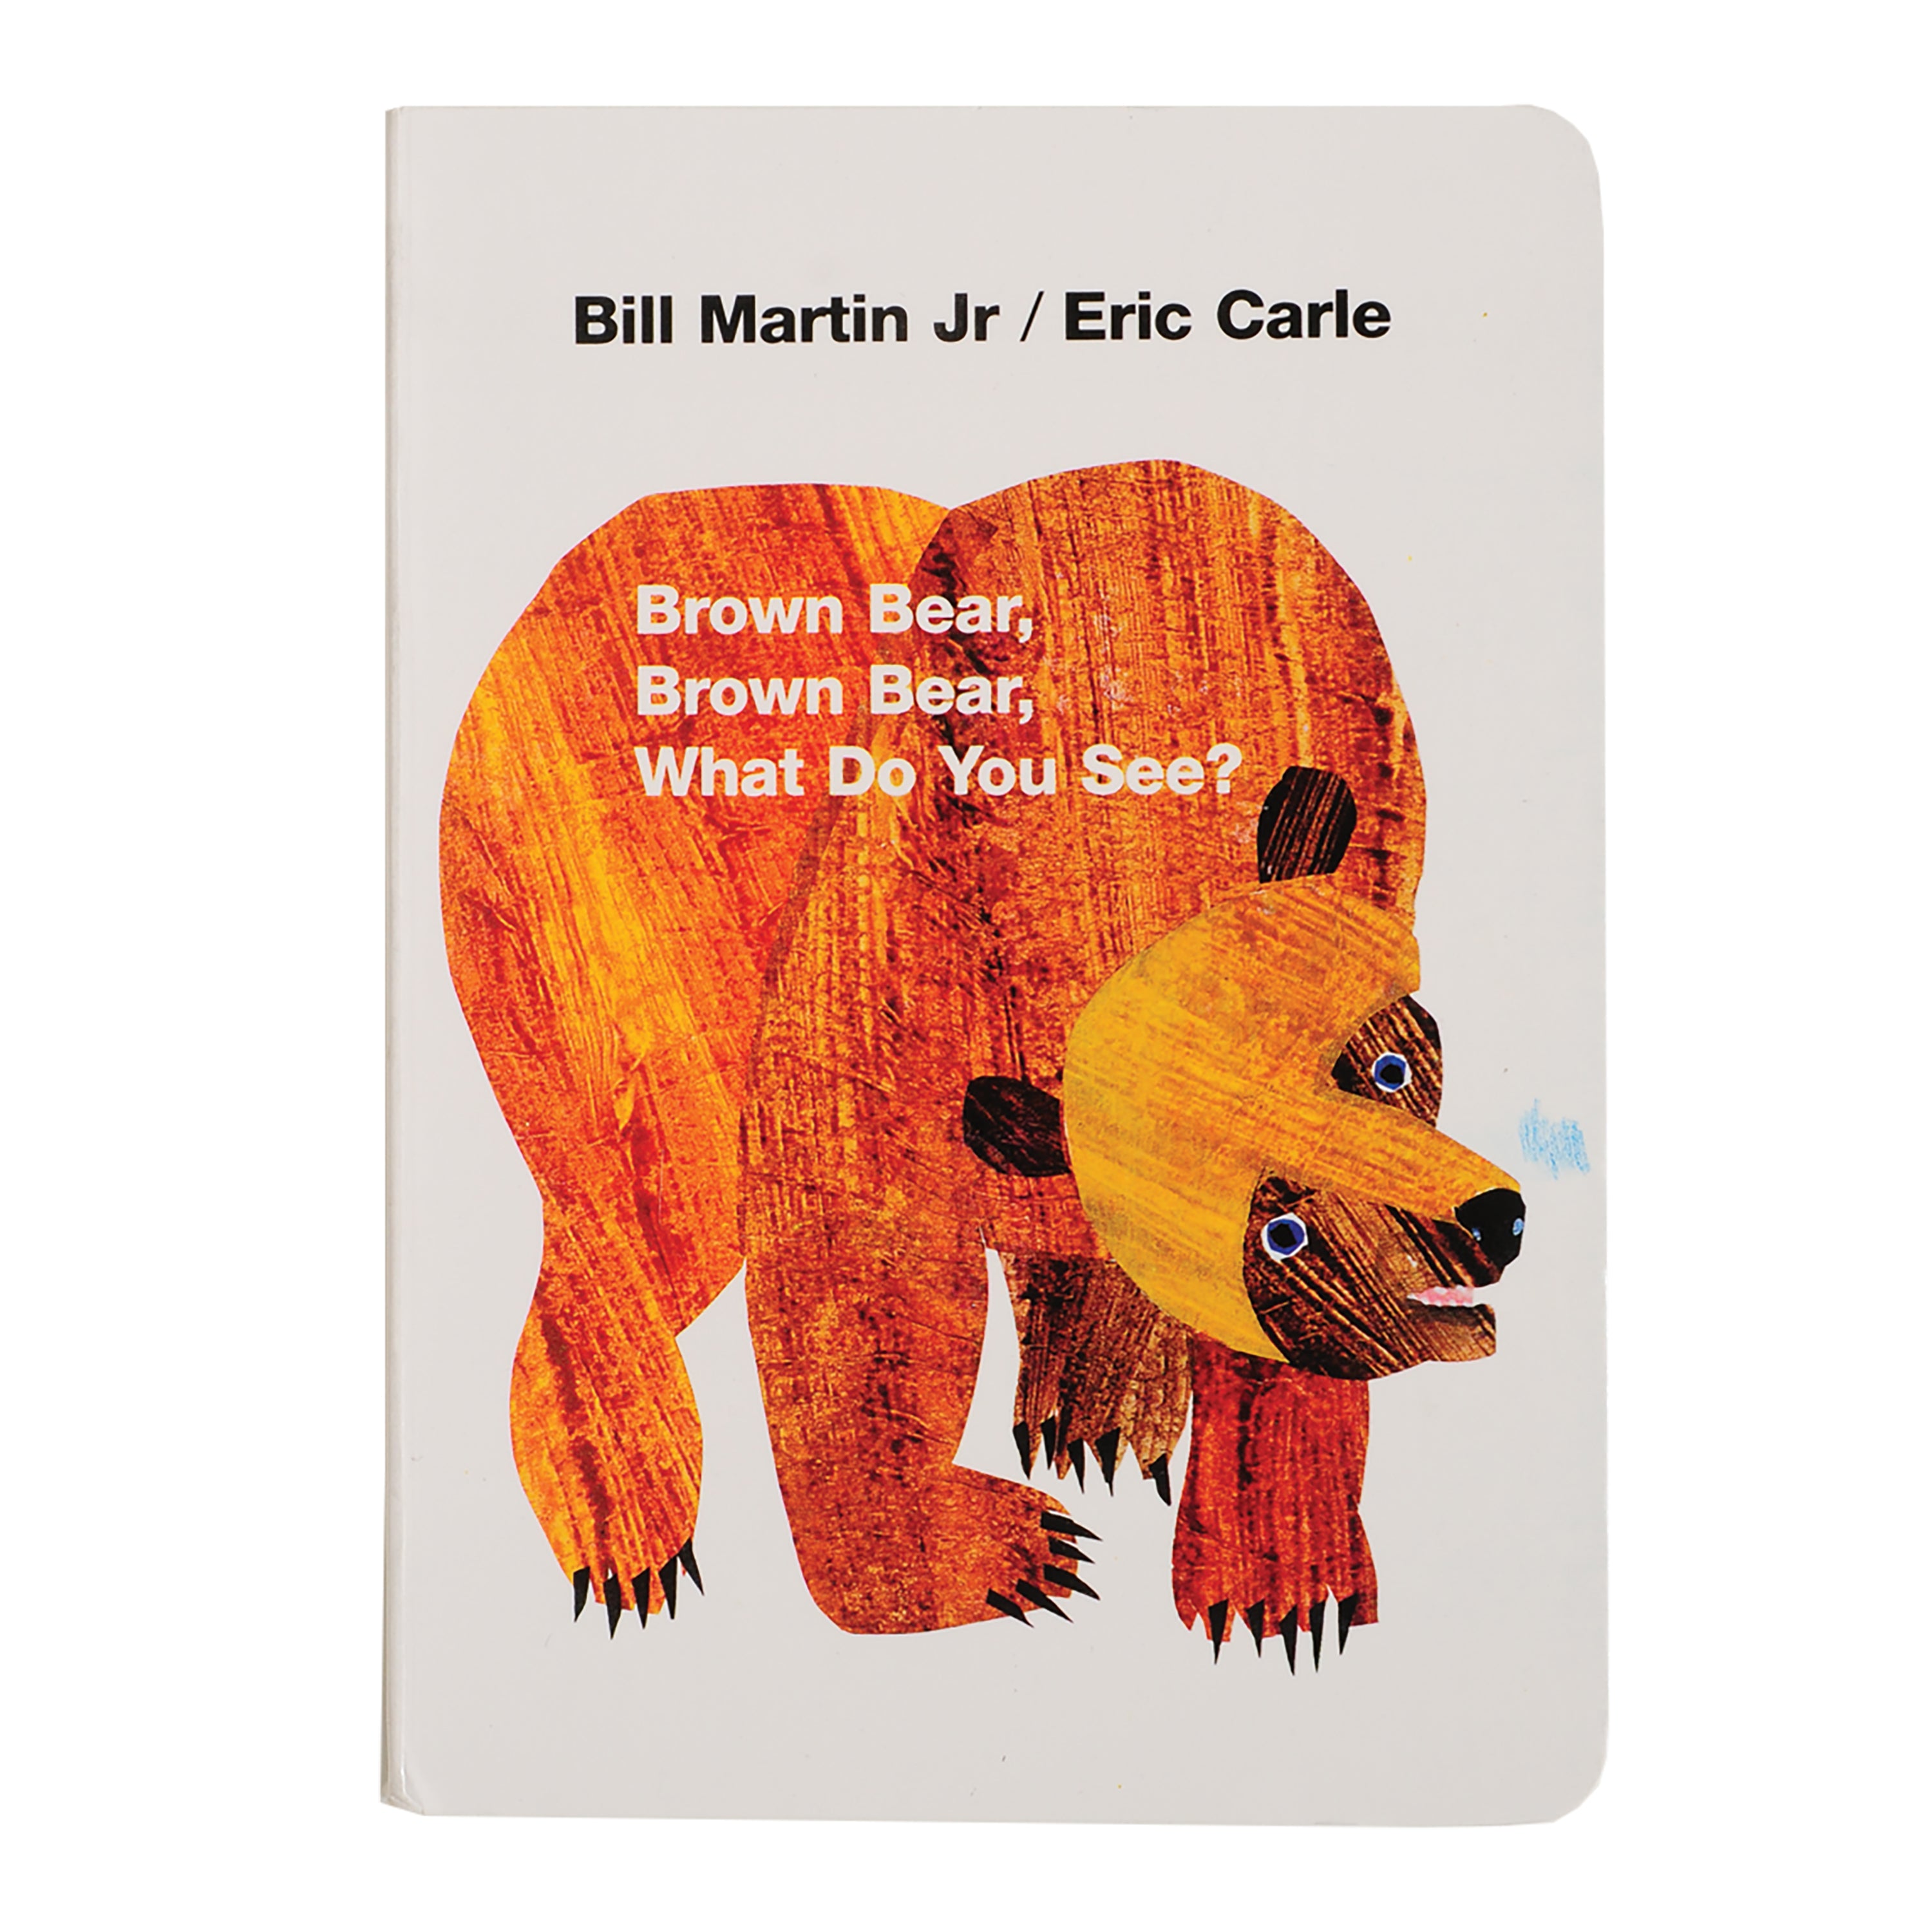 Eric Carle Board Book "Brown Bear, Brown Bear What Do You See"